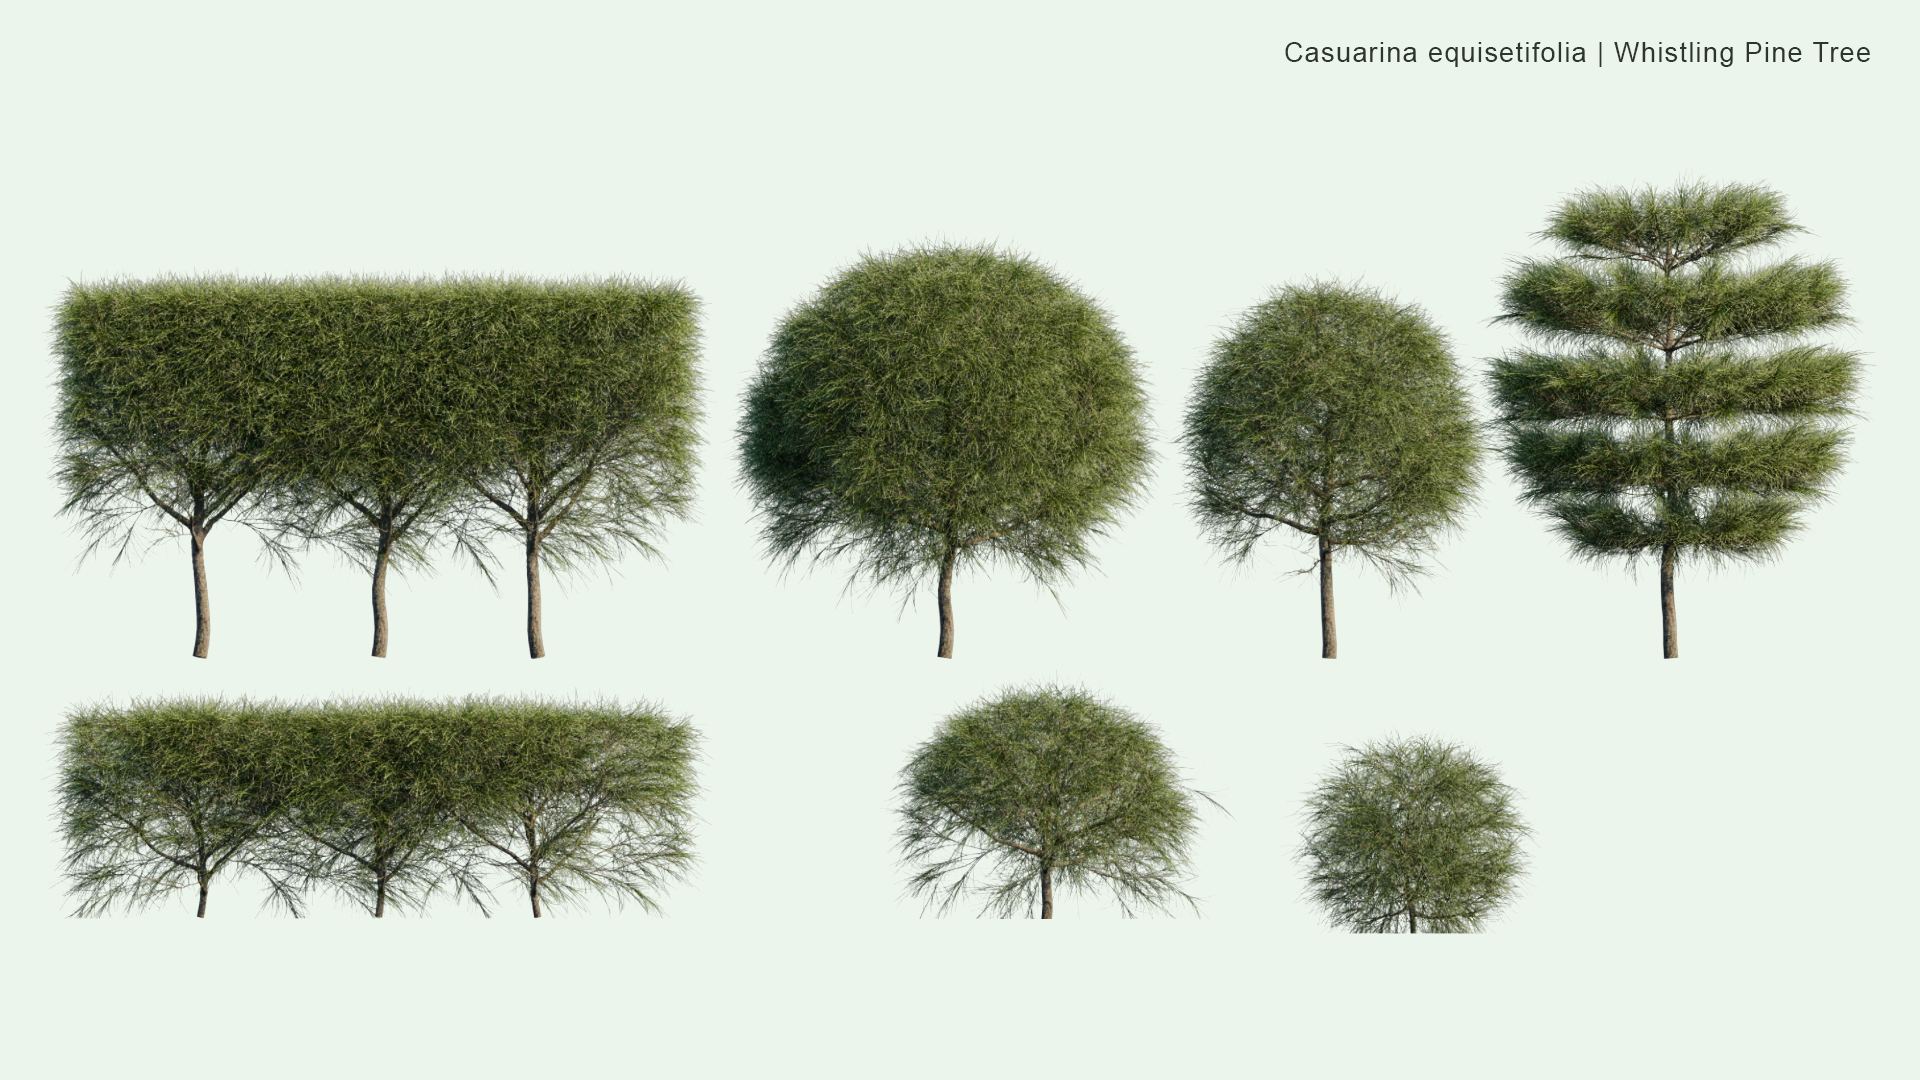 2D Casuarina Equisetifolia - Whistling Pine Tree, Agoho Pine, Australian Pine Tree